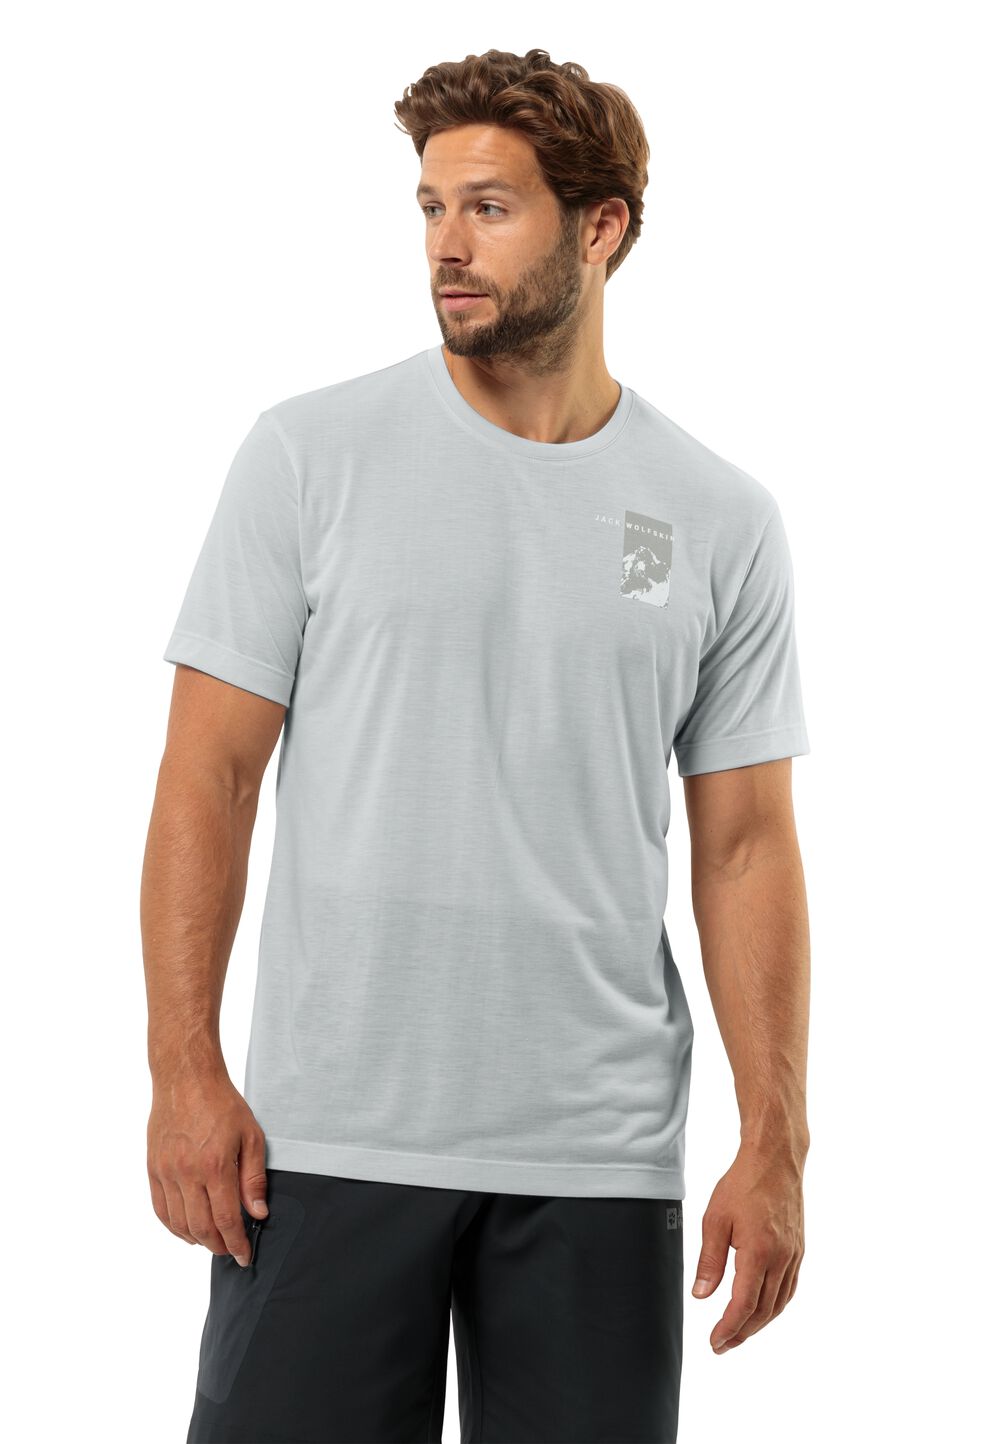 Jack Wolfskin Vonnan S S Graphic T-Shirt Men Functioneel shirt Heren XL grijs cool grey